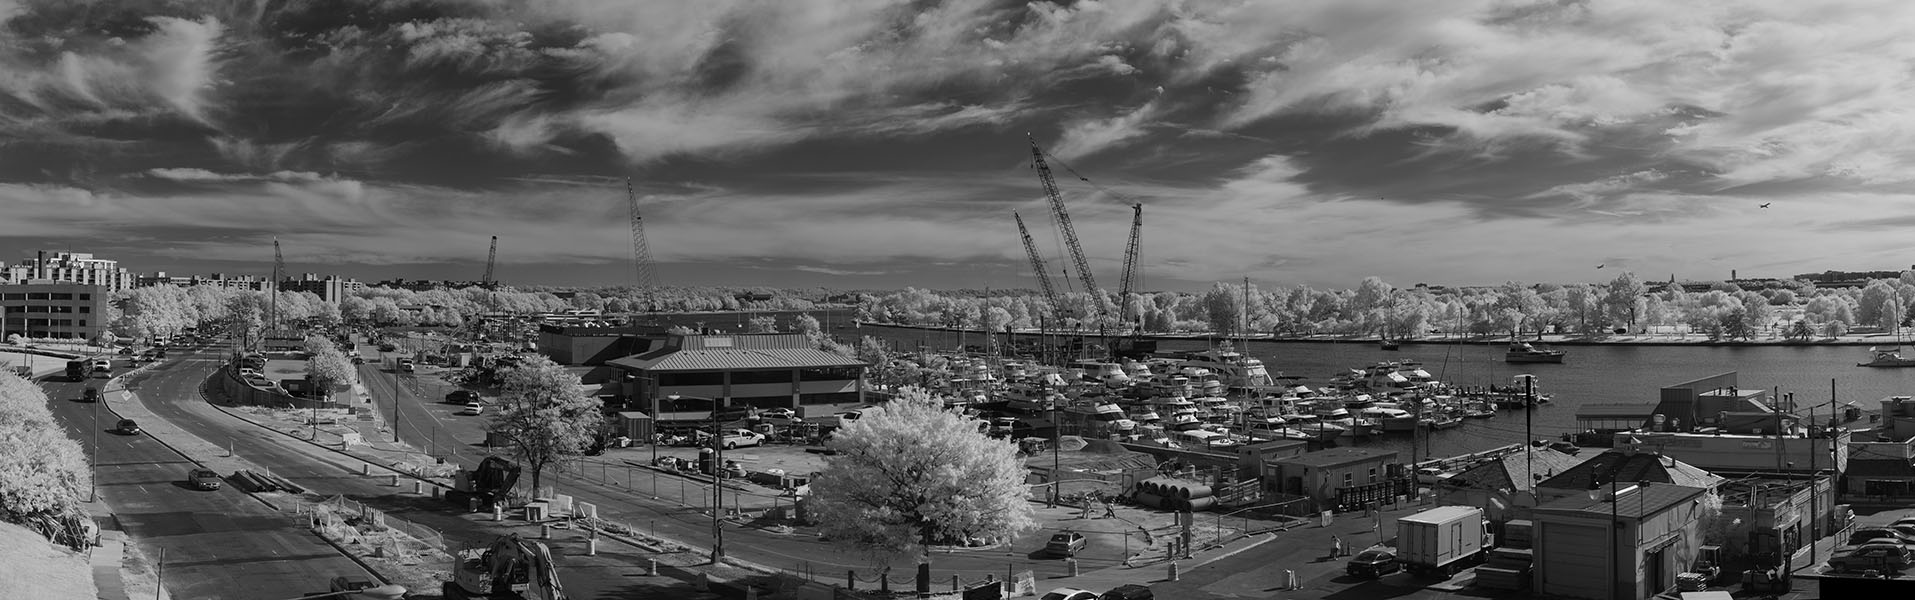 Infrared Panoramic Photo of Washington Waterfront Showing Demolition